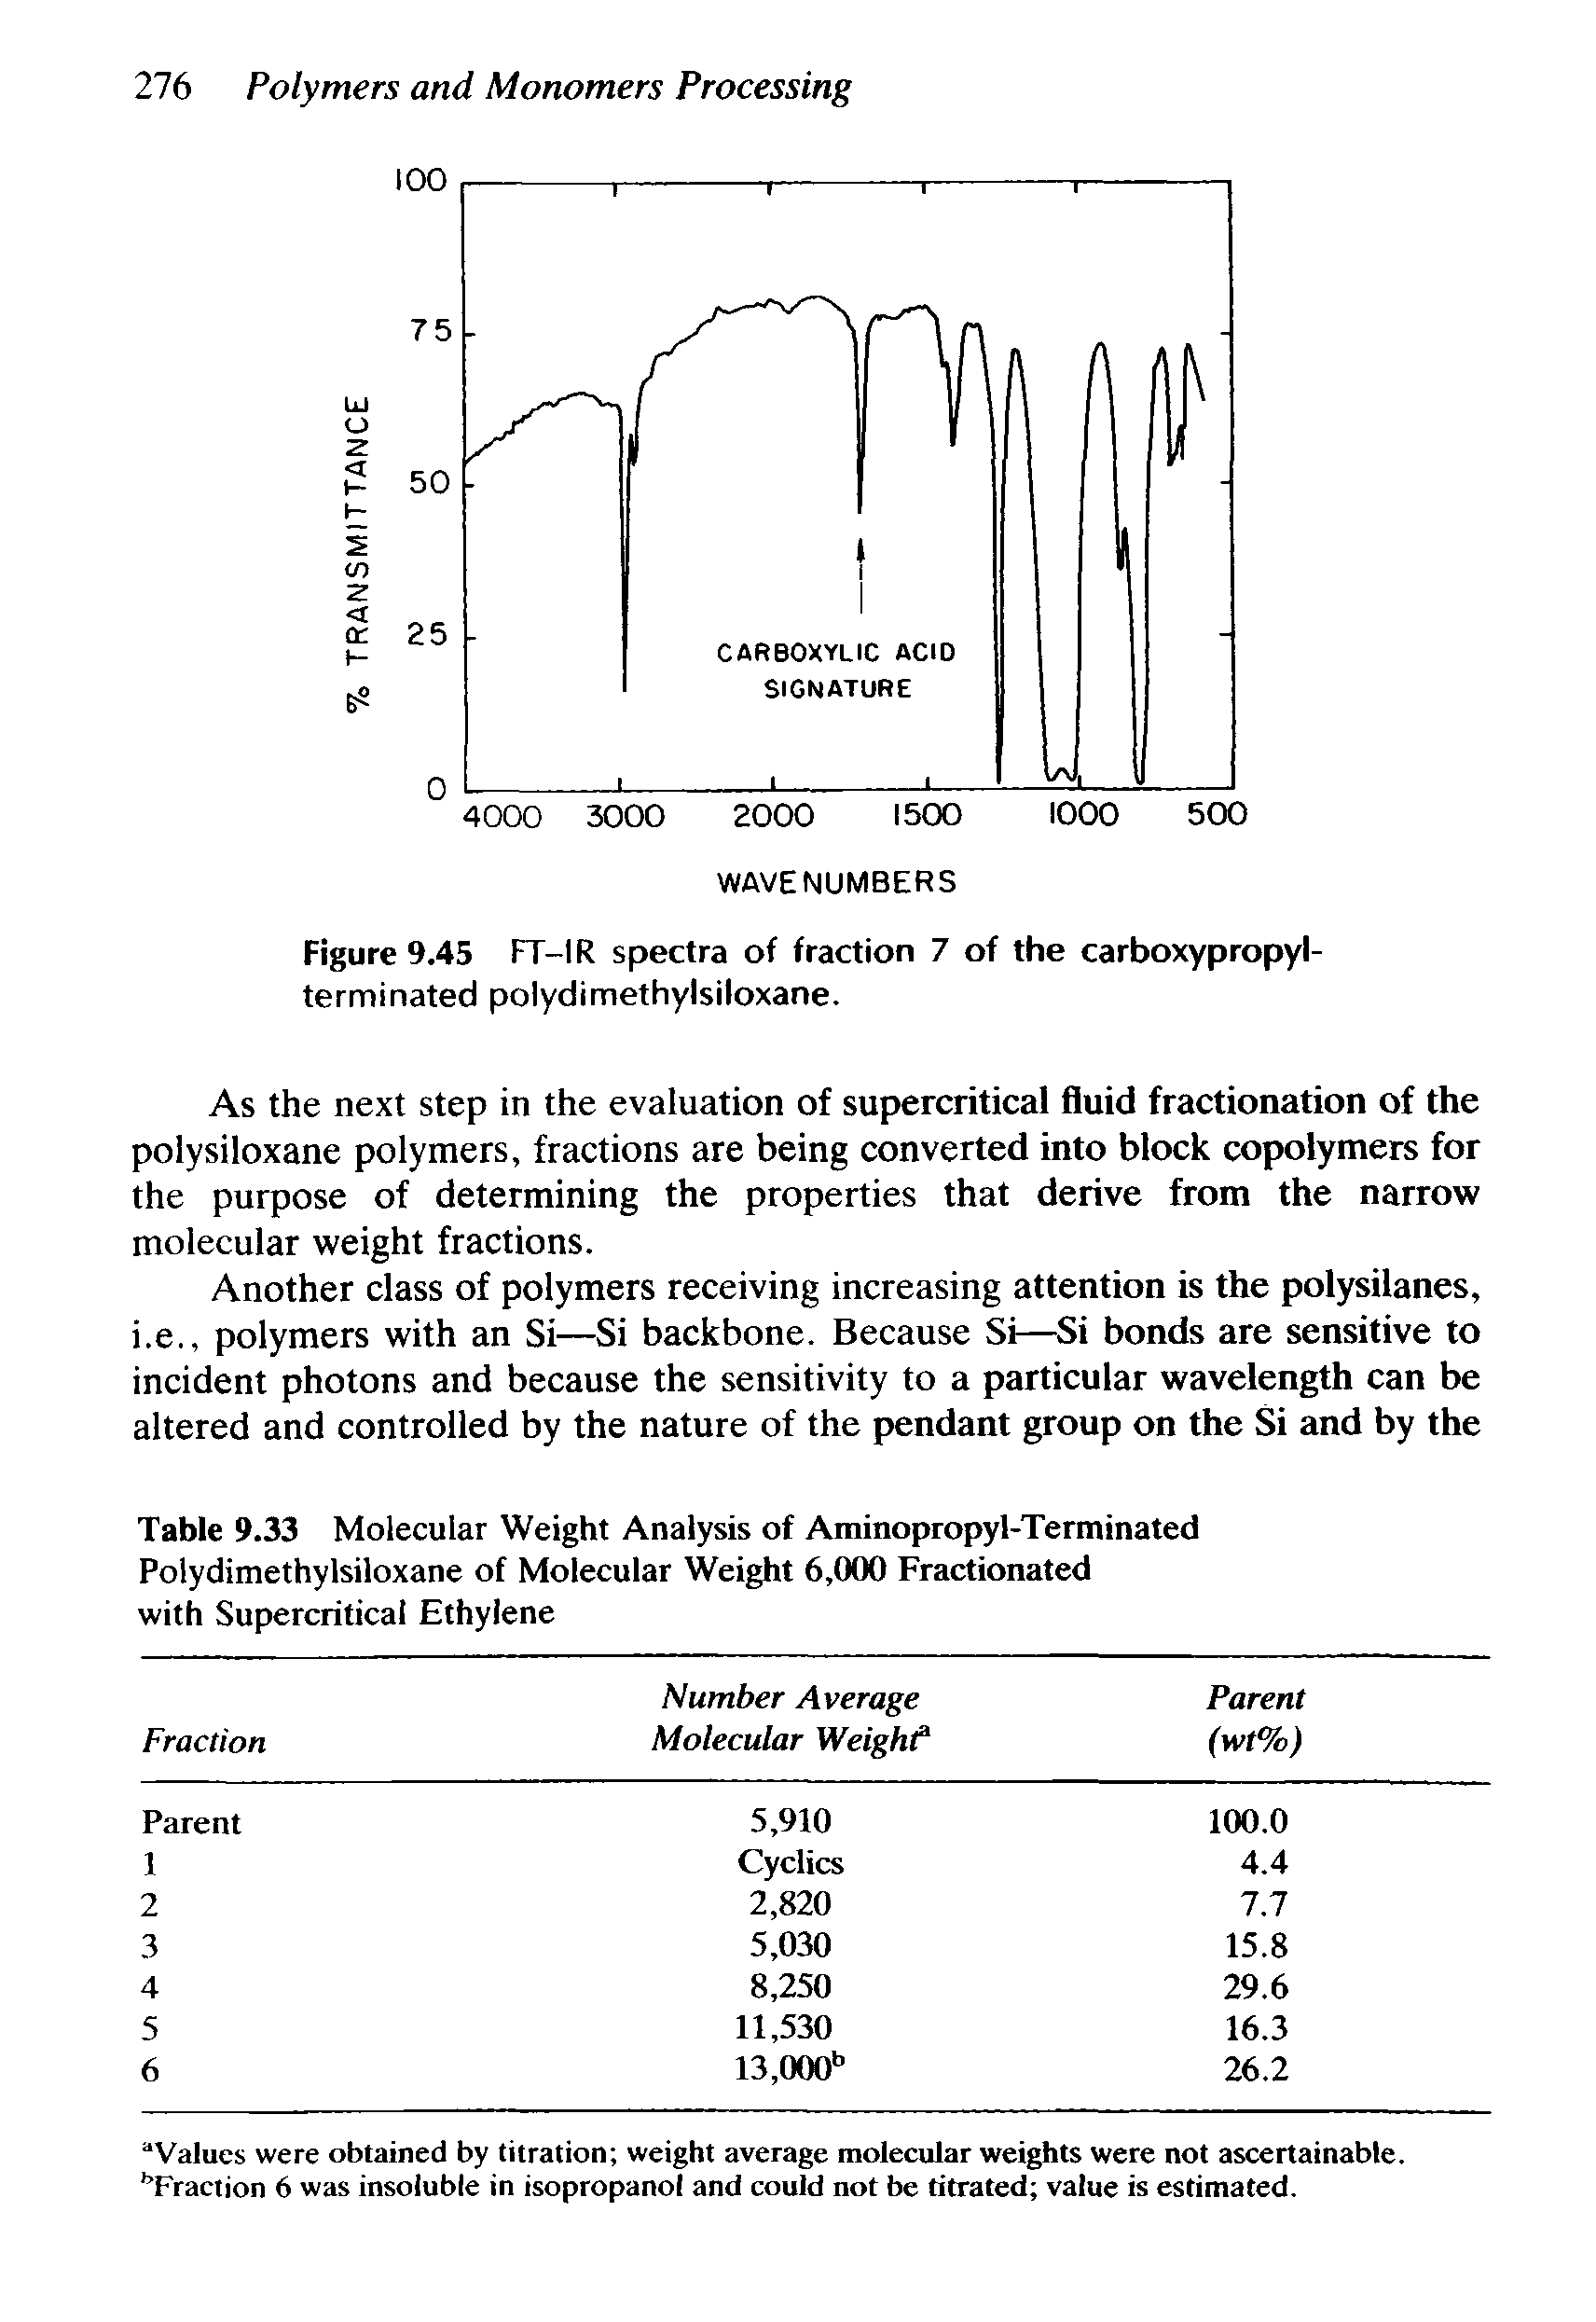 Table 9.33 Molecular Weight Analysis of Aminopropyl-Terminated Polydimethylsiloxane of Molecular Weight 6,000 Fractionated with Supercritical Ethylene...